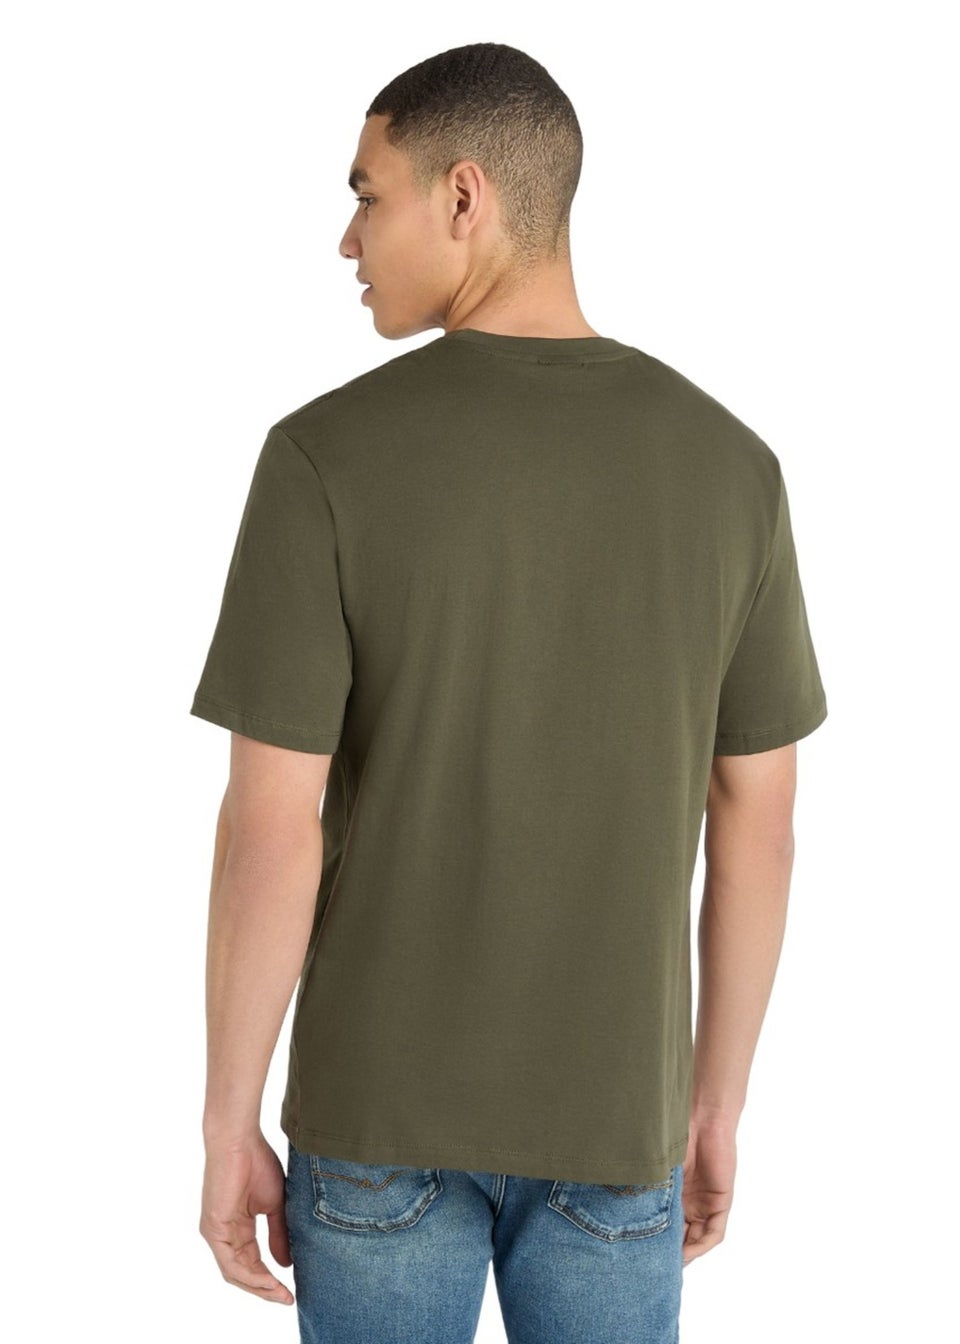 Umbro Dark Green Core Big Logo T-Shirt